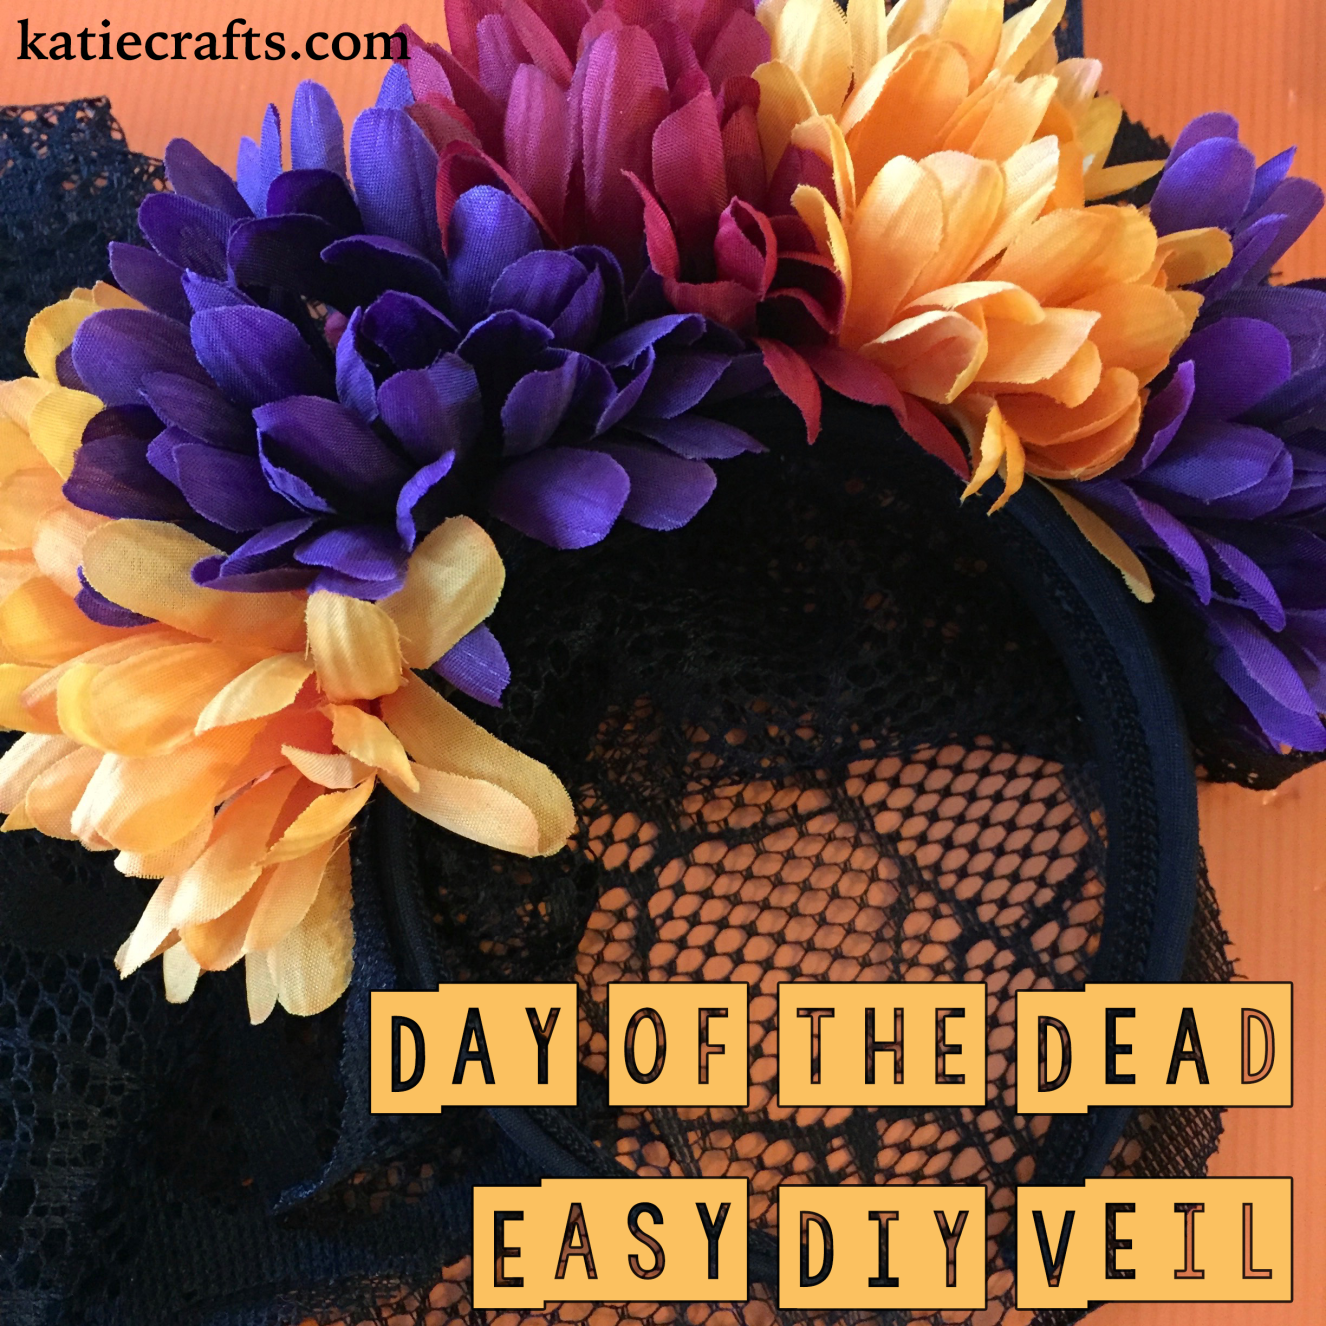 Day of the Dead Easy DIY Veil Tutorial on Katie Crafts; https://www.katiecrafts.com